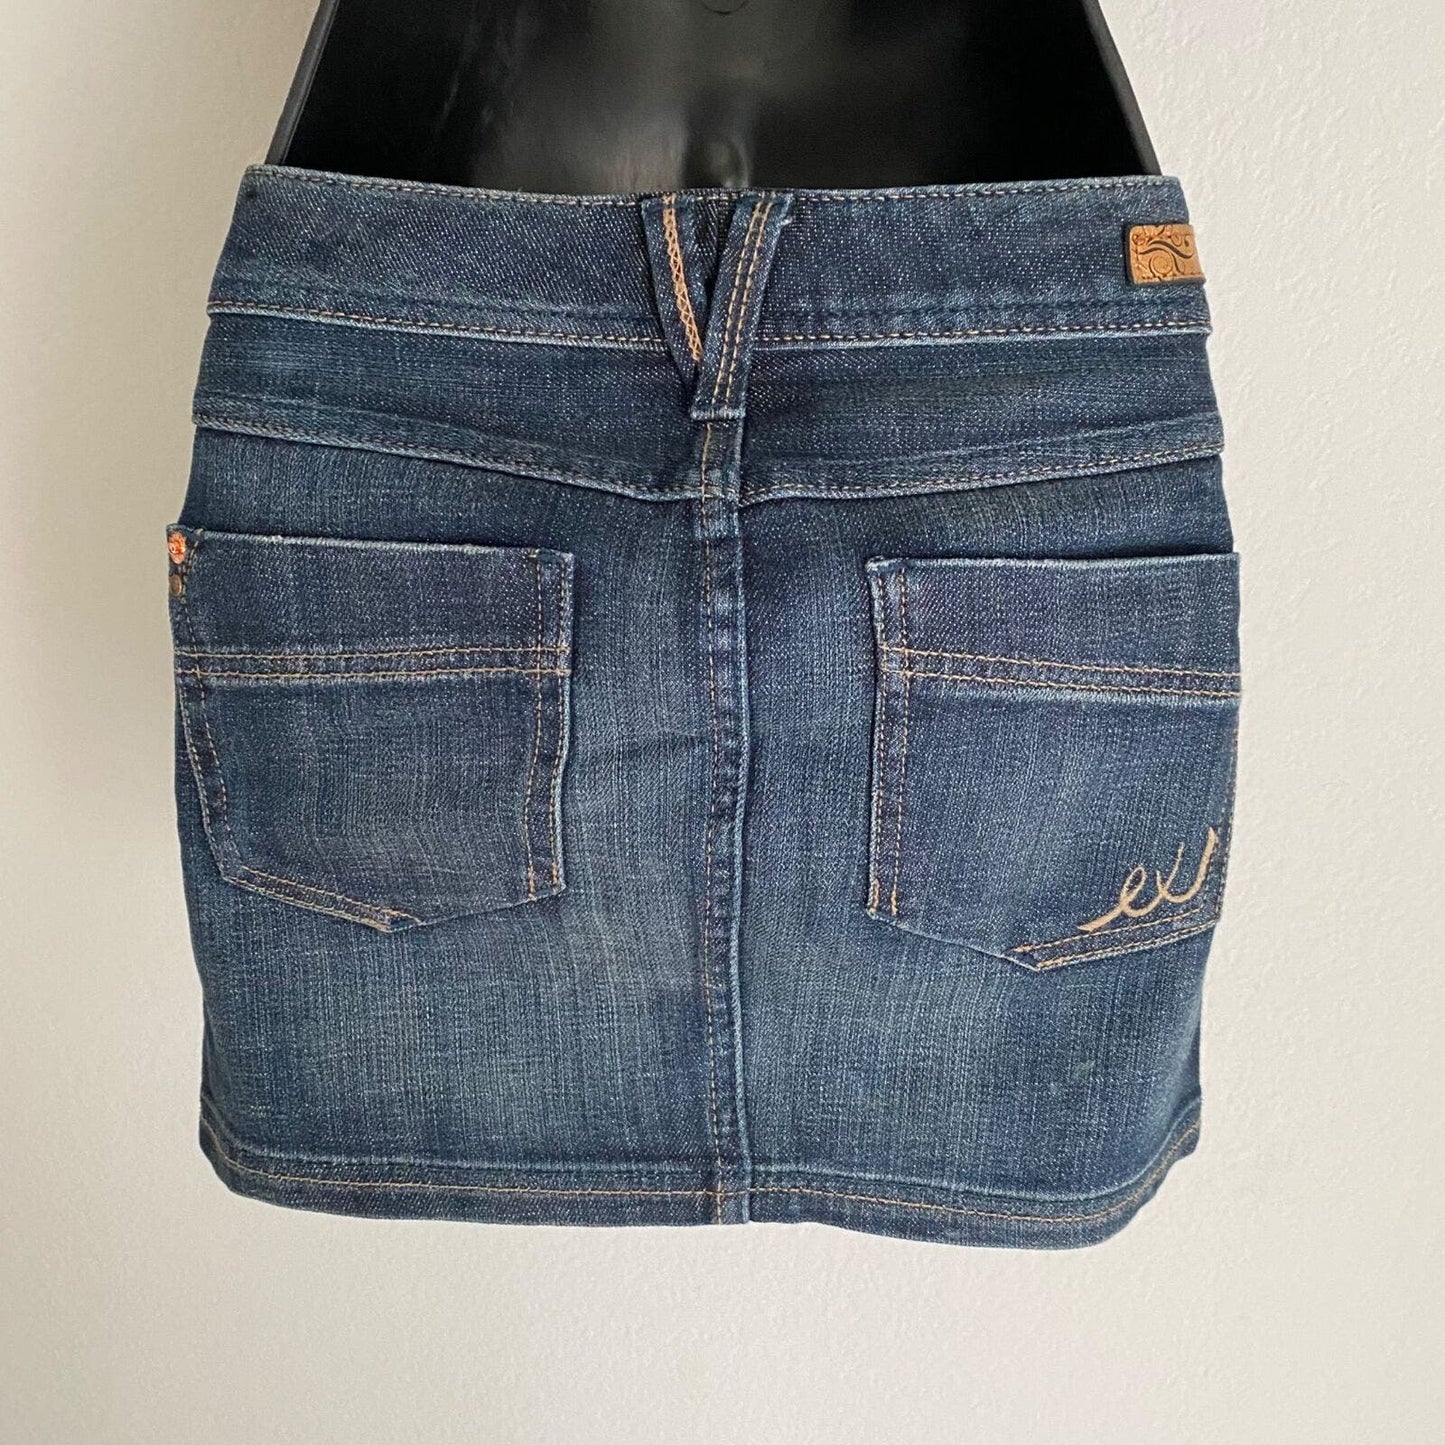 Express Jeans sz 2 Hipster blue jean mini skirt